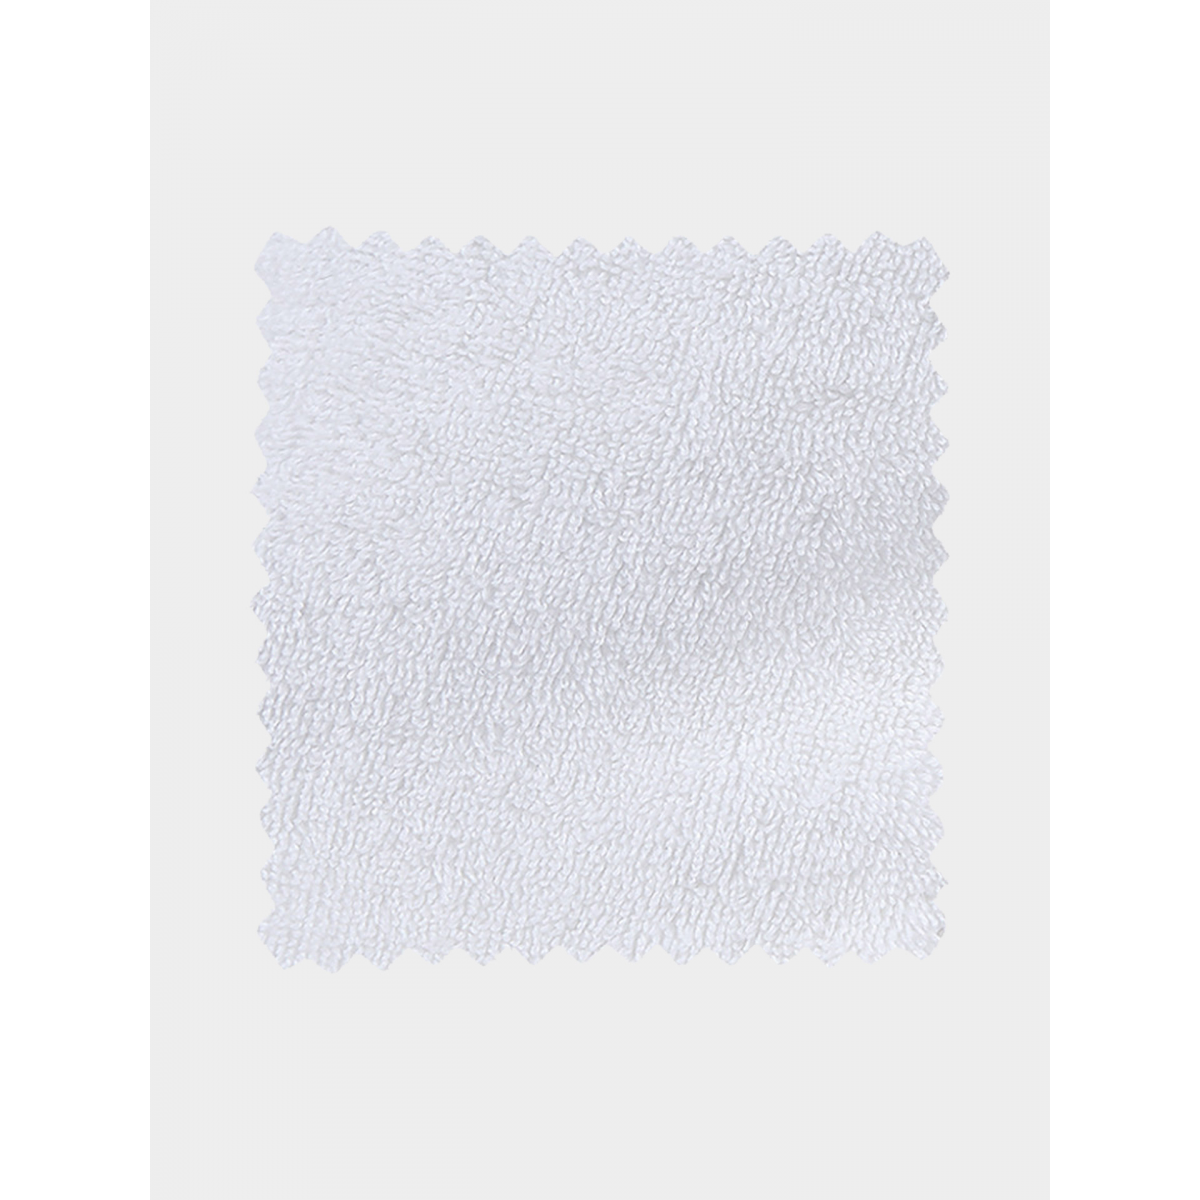 100% Cotton Fabric Swatch in White - A-FELPO_WHITE